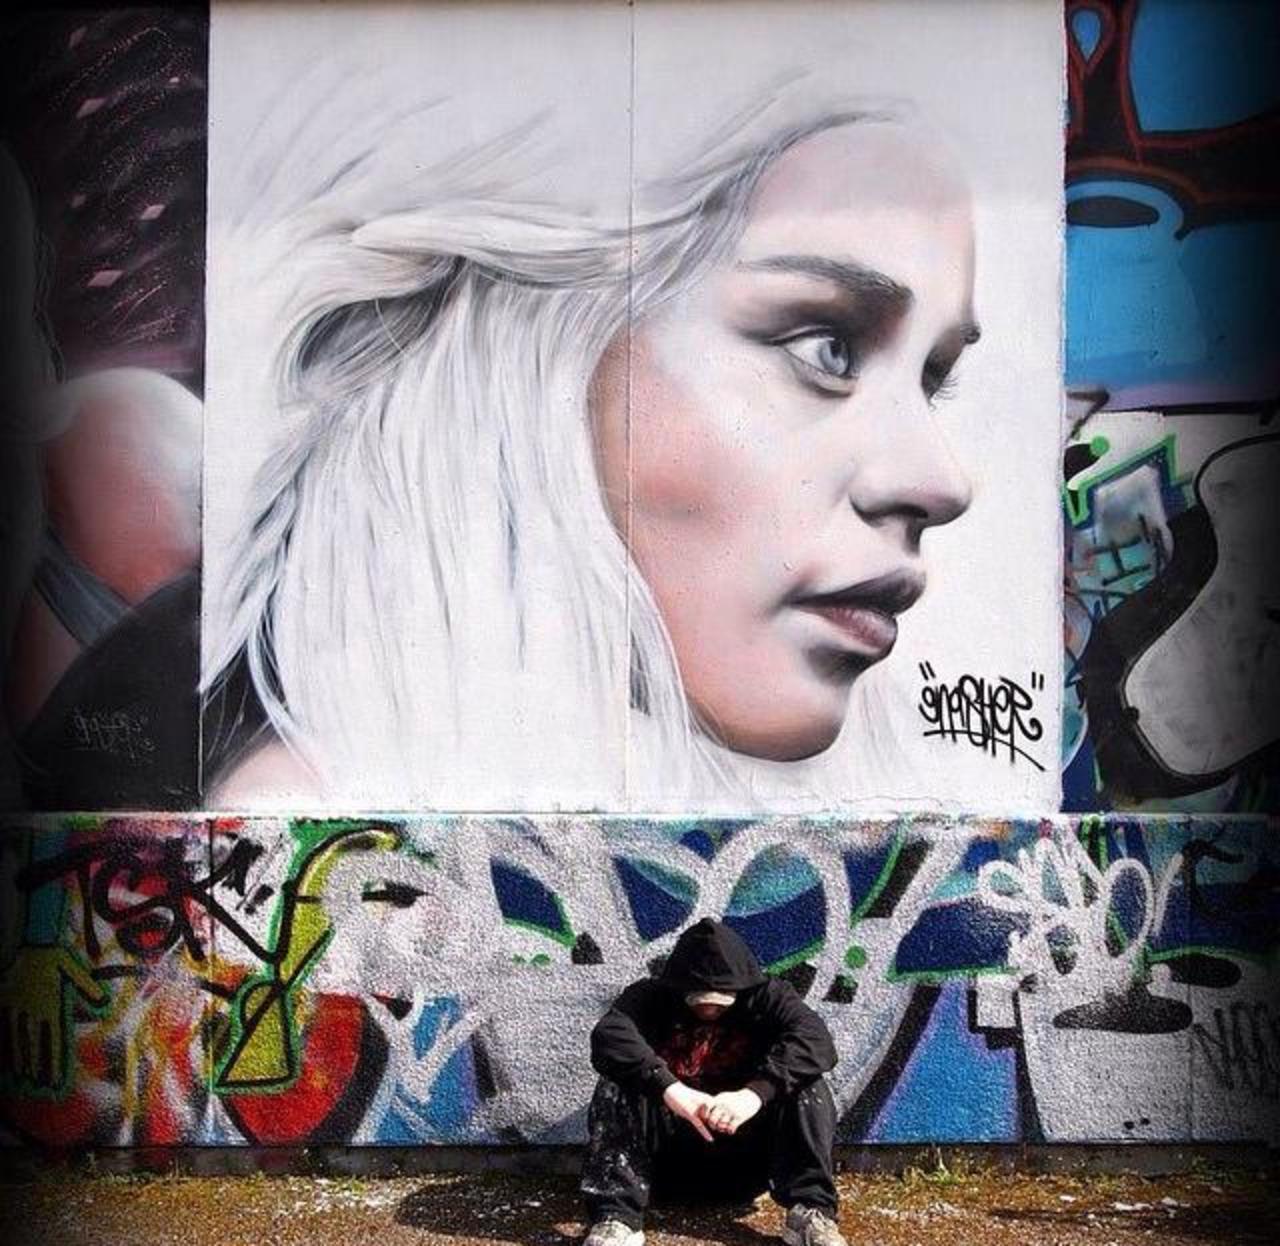 I... AM... GROOT @I___am___Groot_: #GameofThrones Street Art by Gnasher 

#art #arte #graffiti #streetart http://t.co/NZENGV9Dss